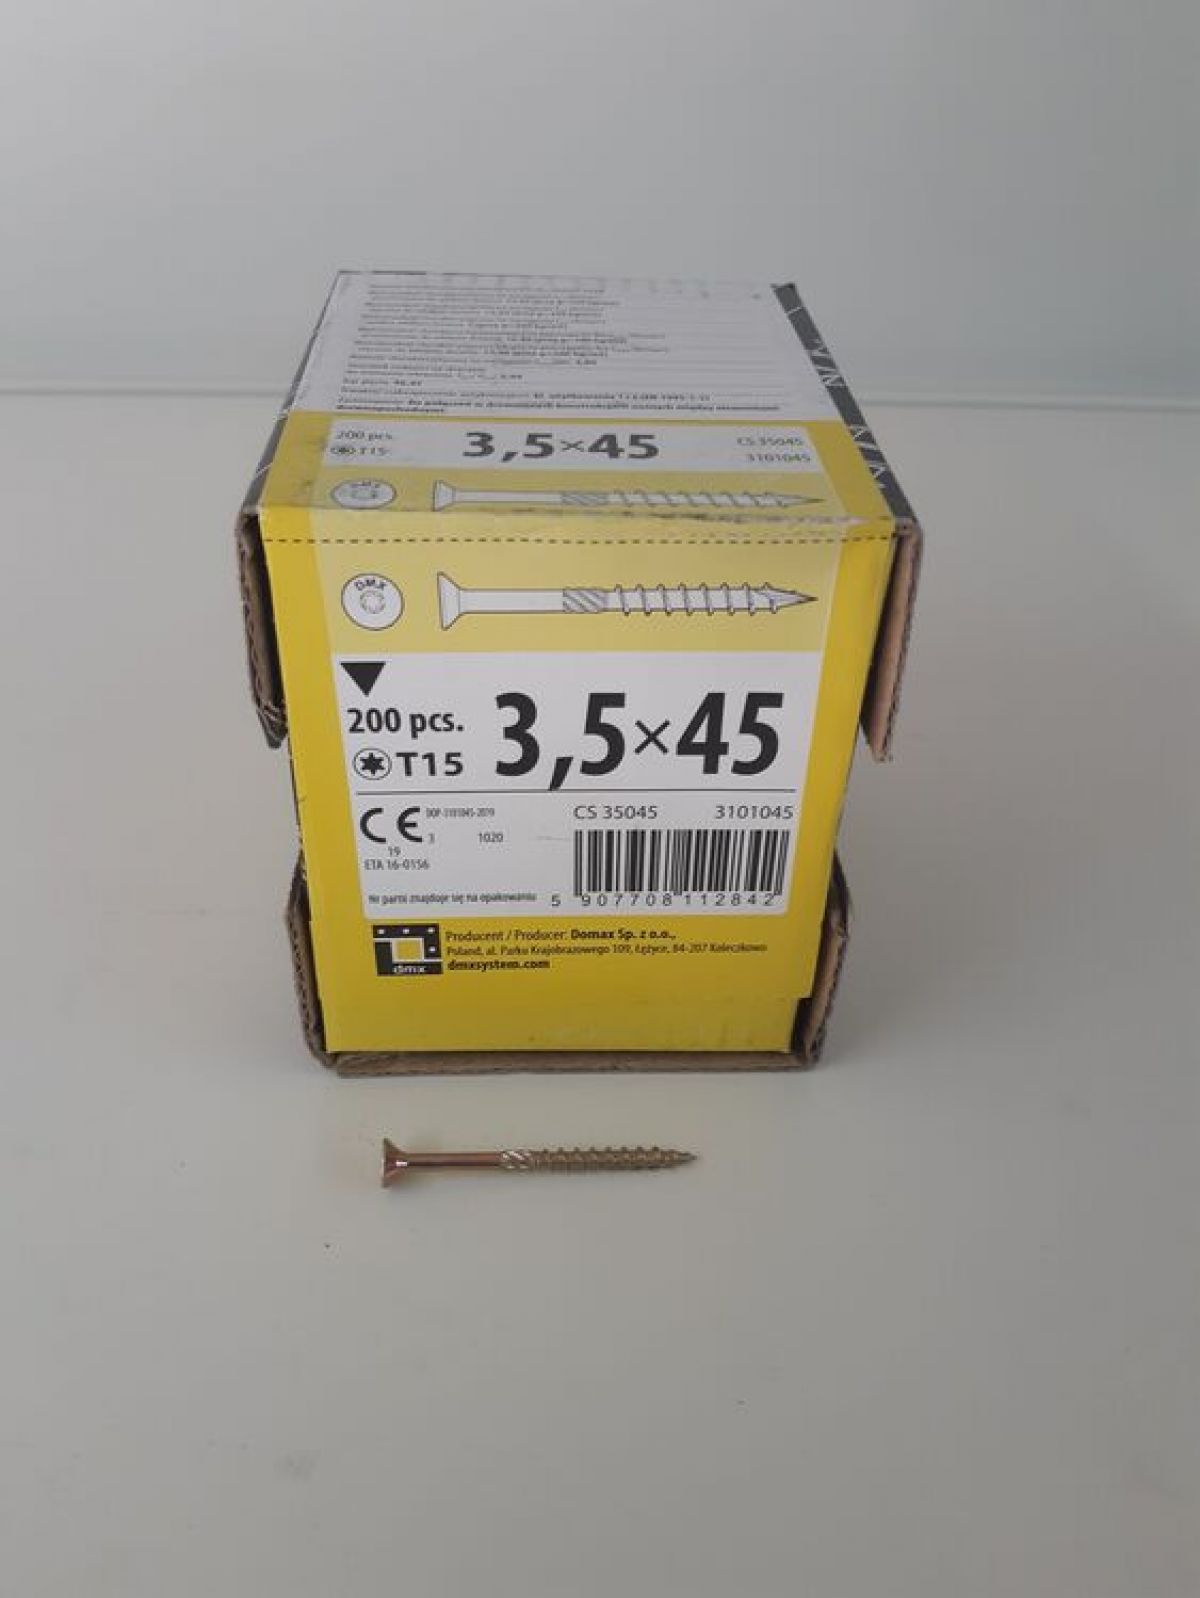 CS 3,5x30 construction screw with flat head 3,5x30 200pcs/pack - 2.20 €